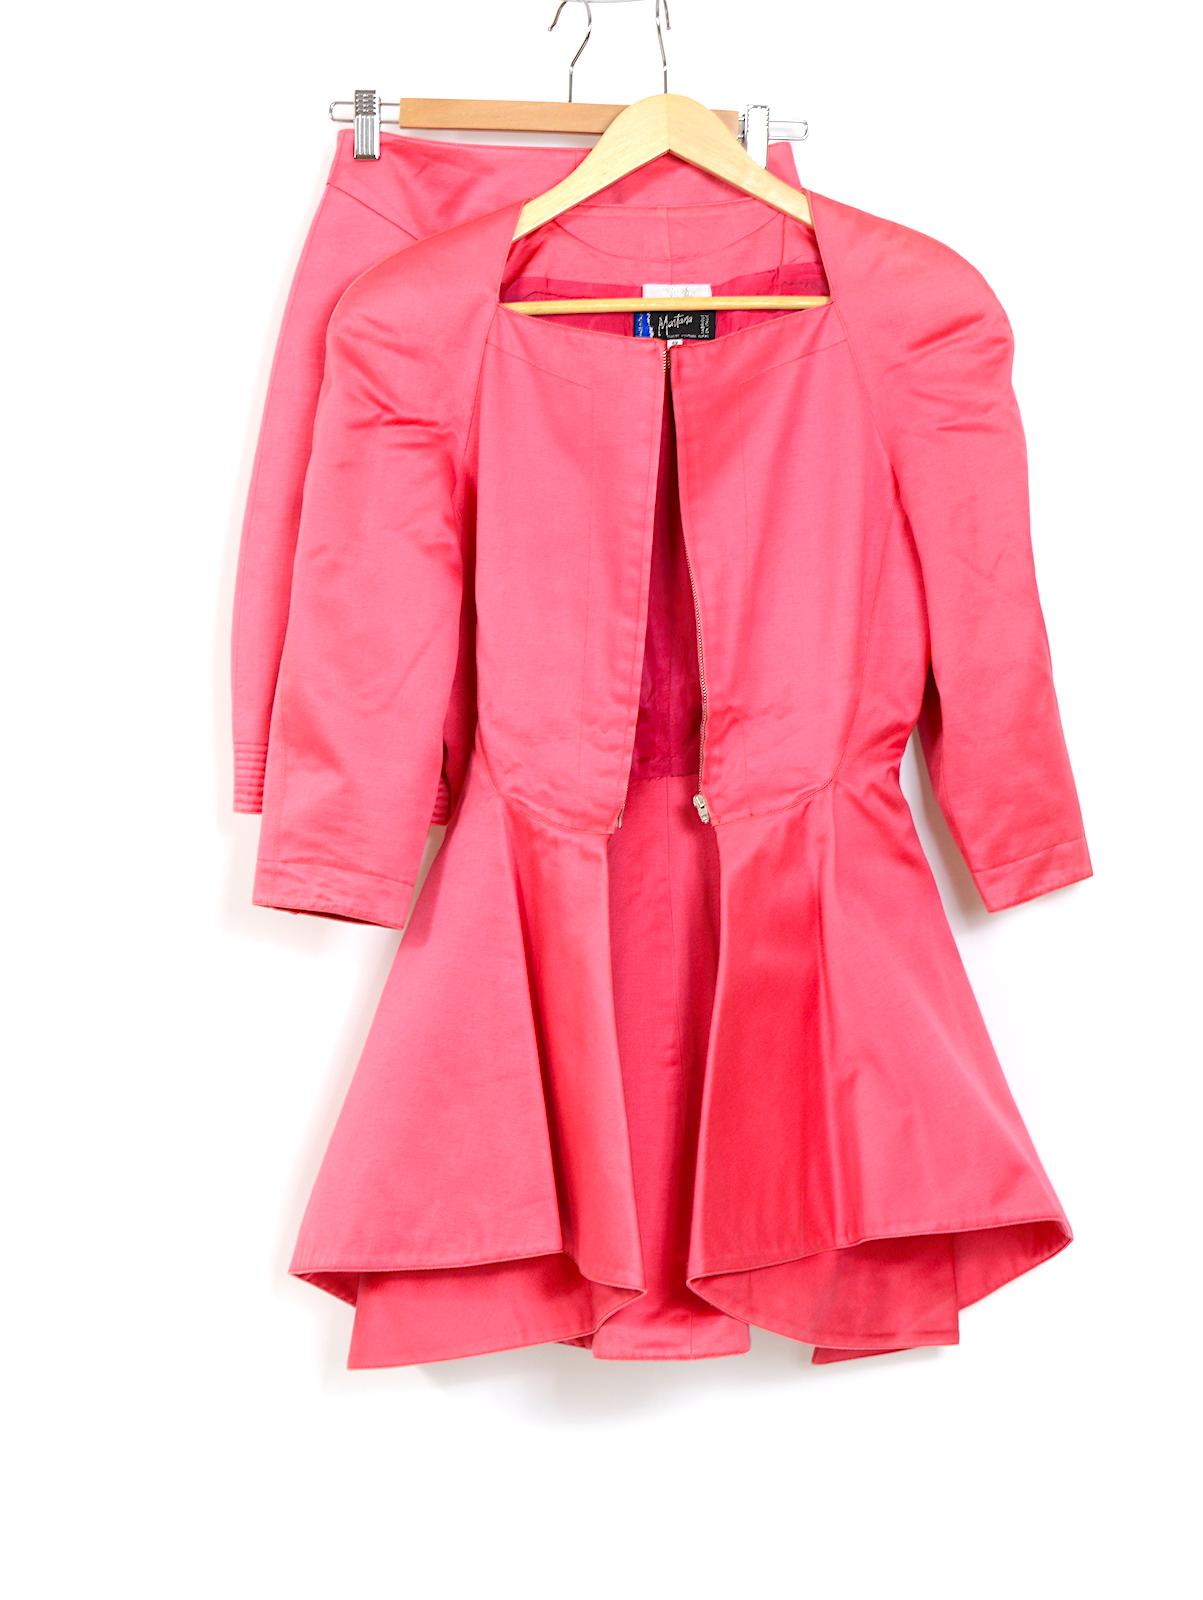 Women's Claude Montana 1990s vintage bold fuchsia pink peplum jacket and mini skirt 